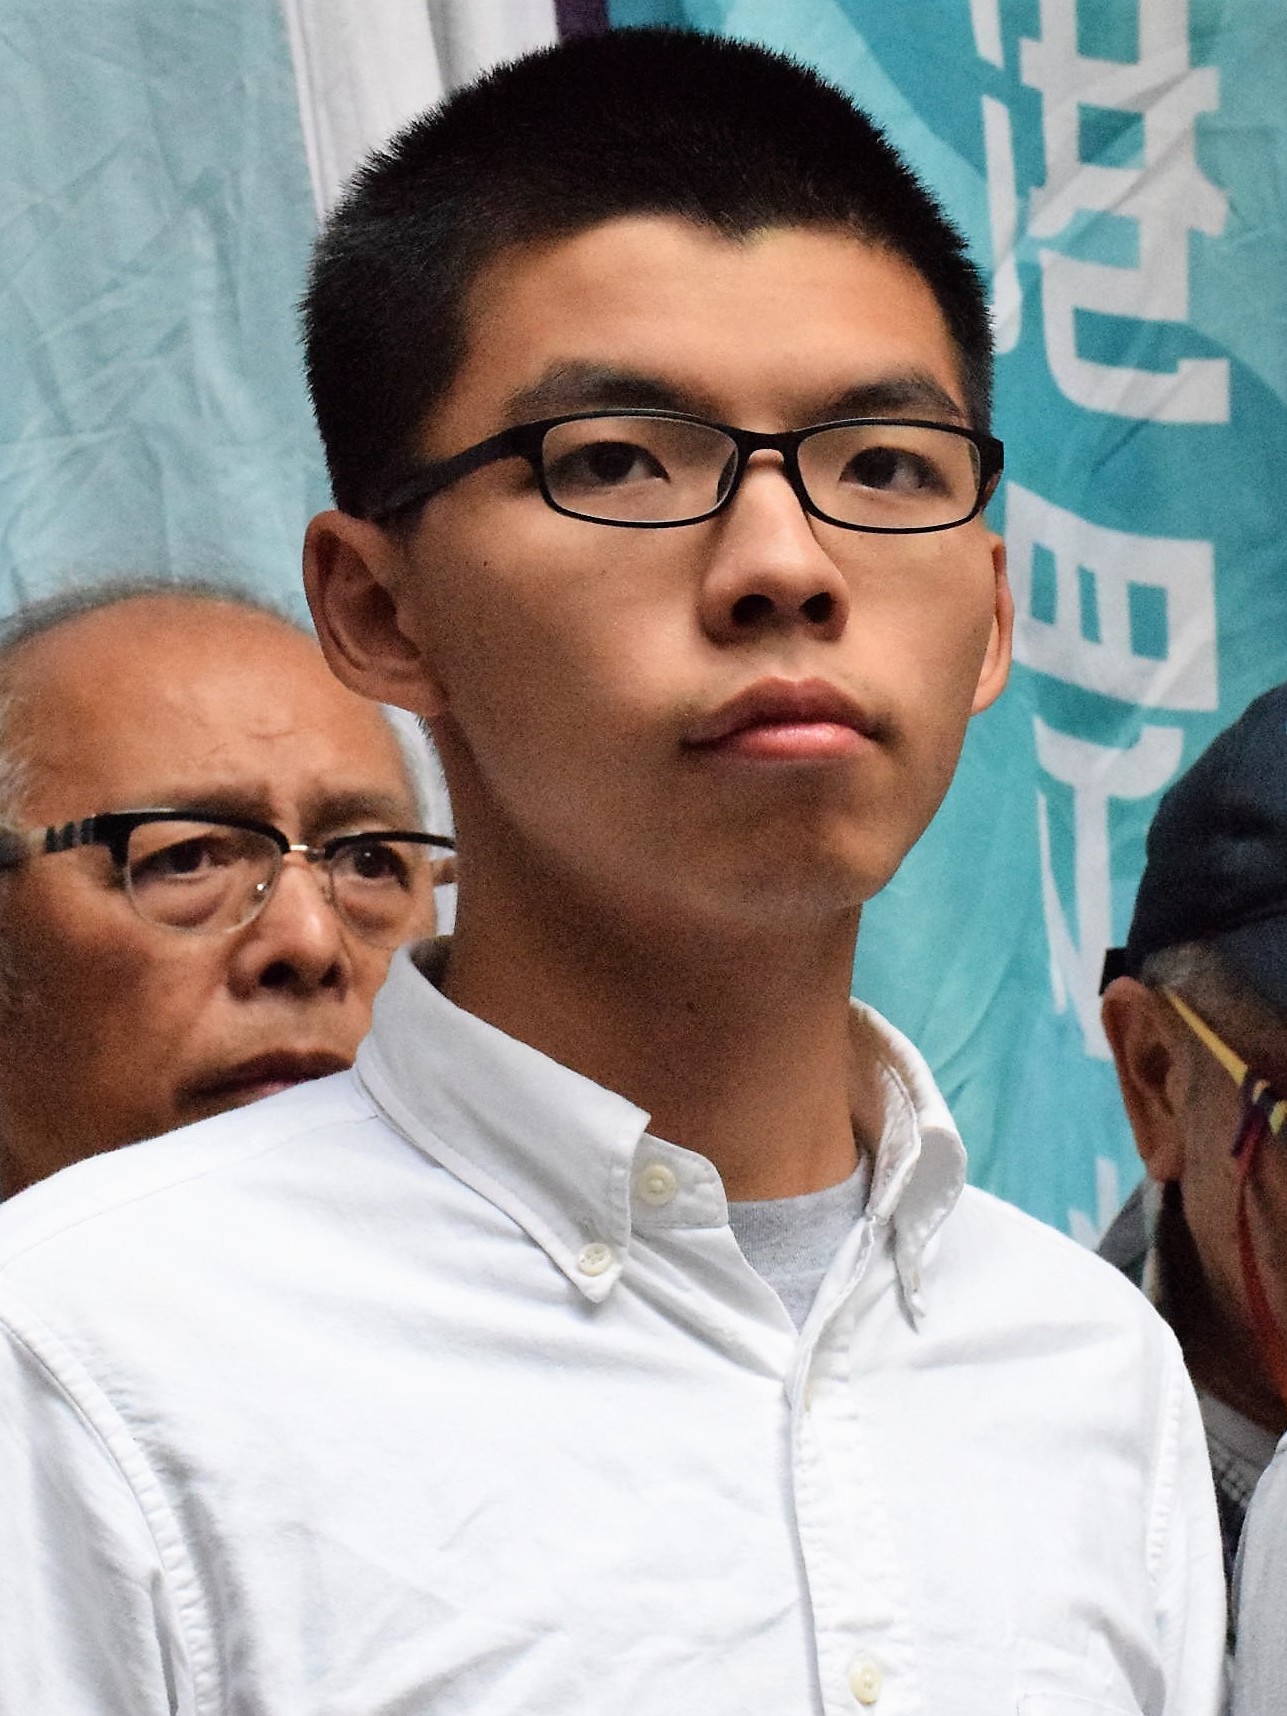 UPDATE 1-Hong Kong democracy activist Joshua Wong among three arrested before weekend protests